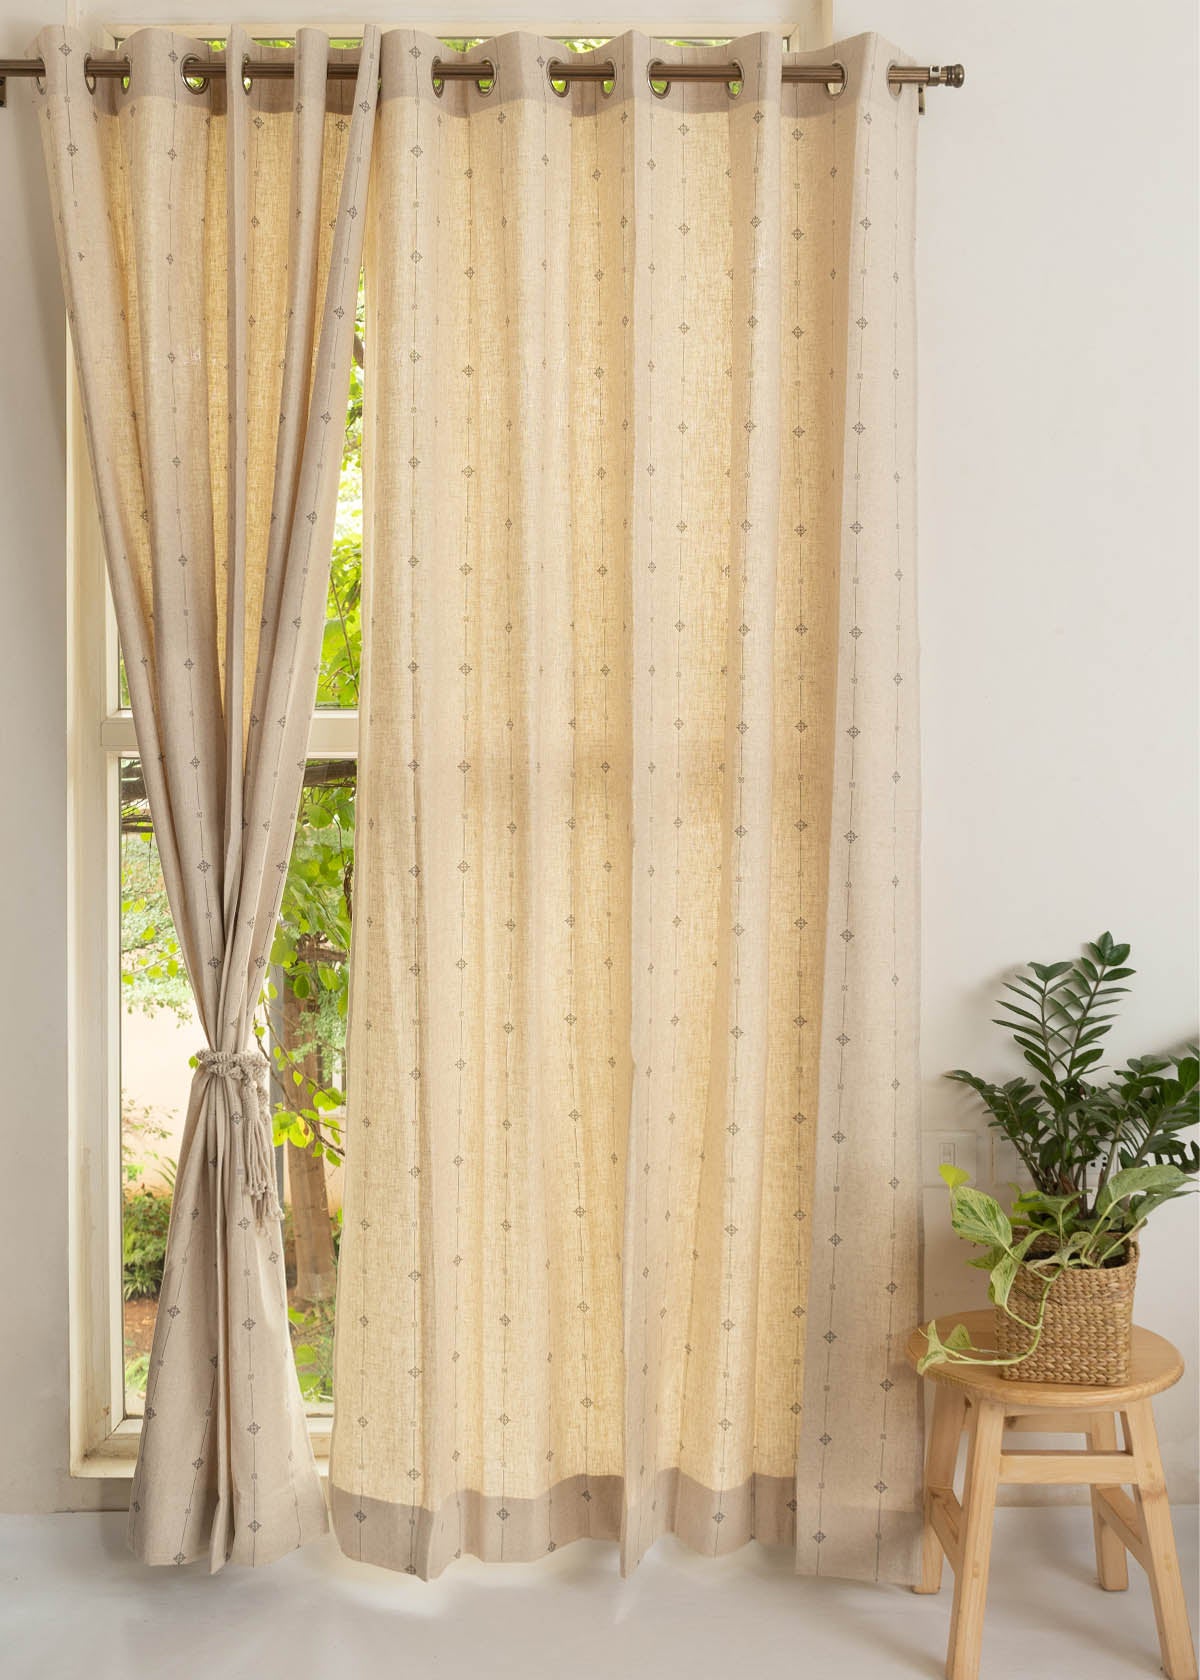 Tulsi linen Customizable Cotton ethnic curtain for Living room & bedroom - Room darkening  - Beige